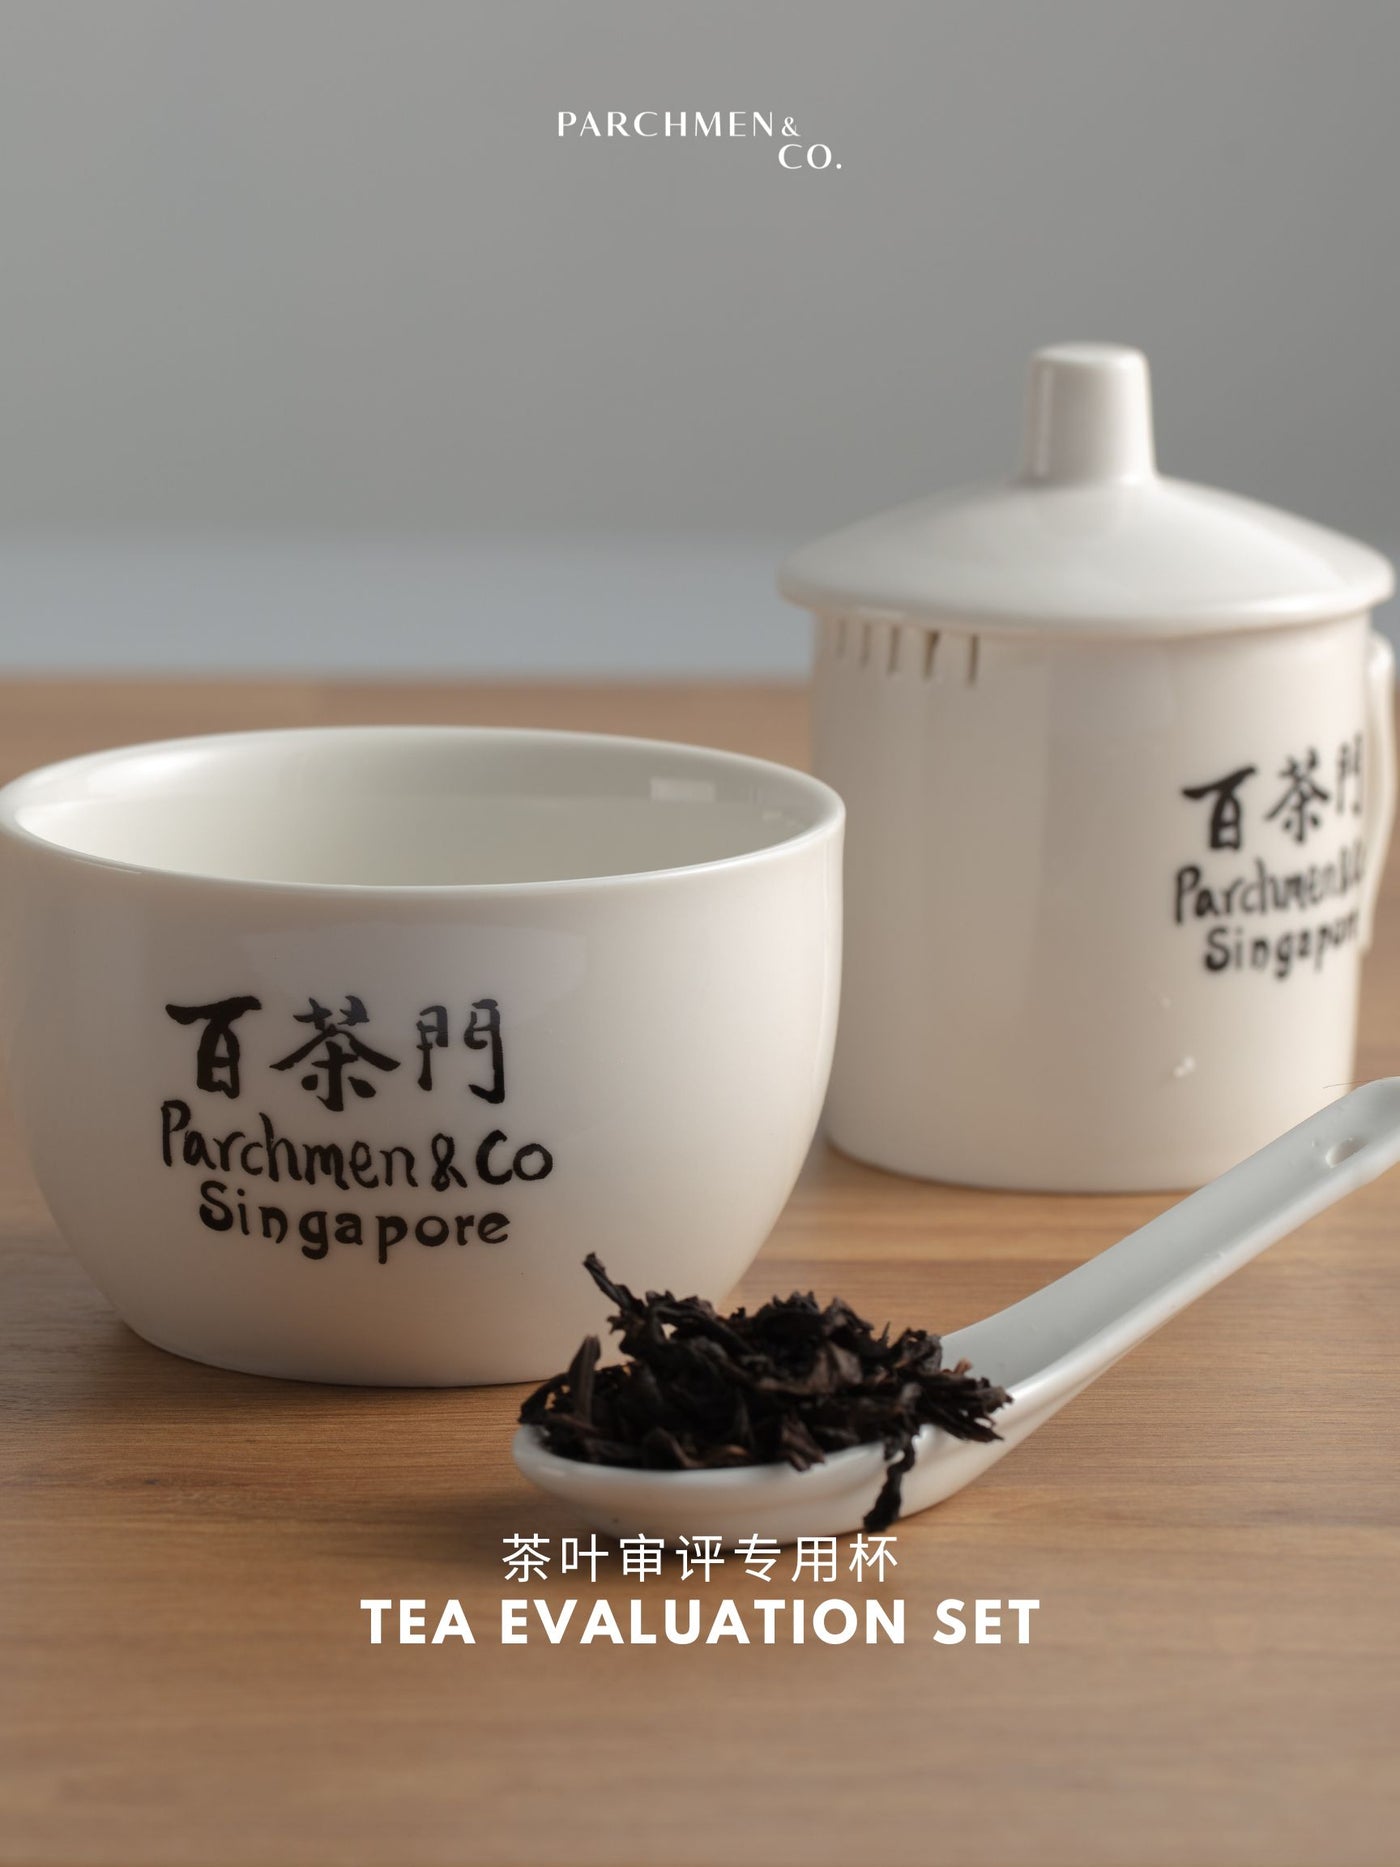 Tea Evaluation Set